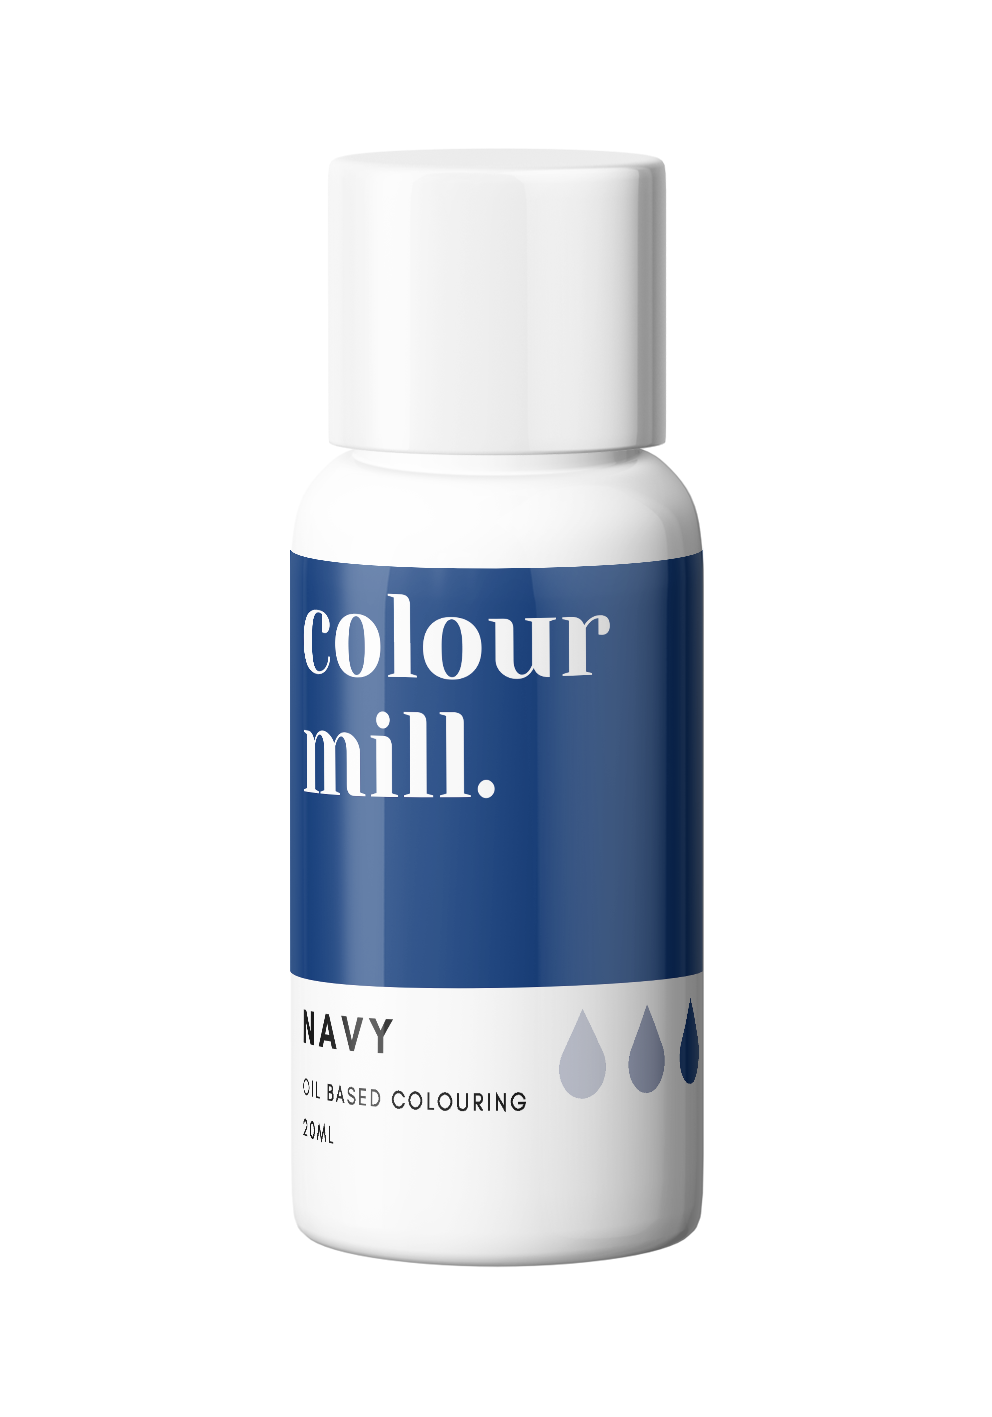 NAVY - 20ml Colour Mill